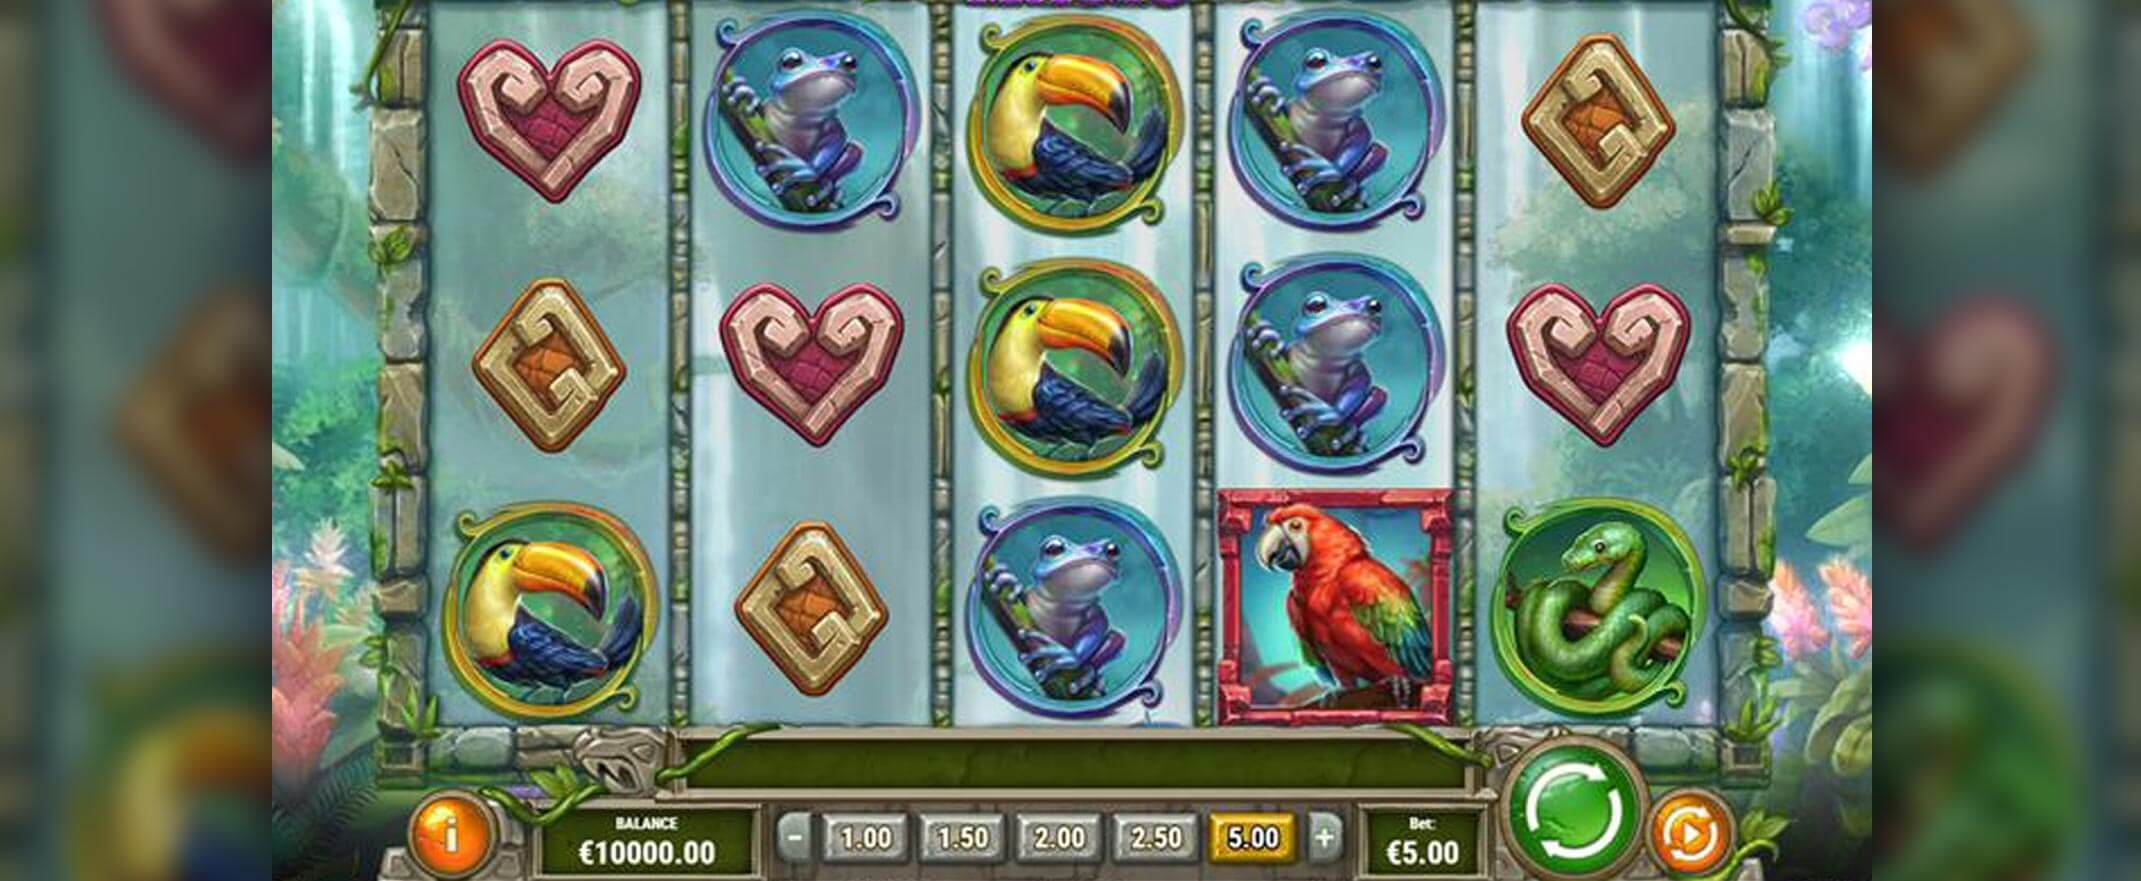 Rainforest Magic slot by Play'n Go